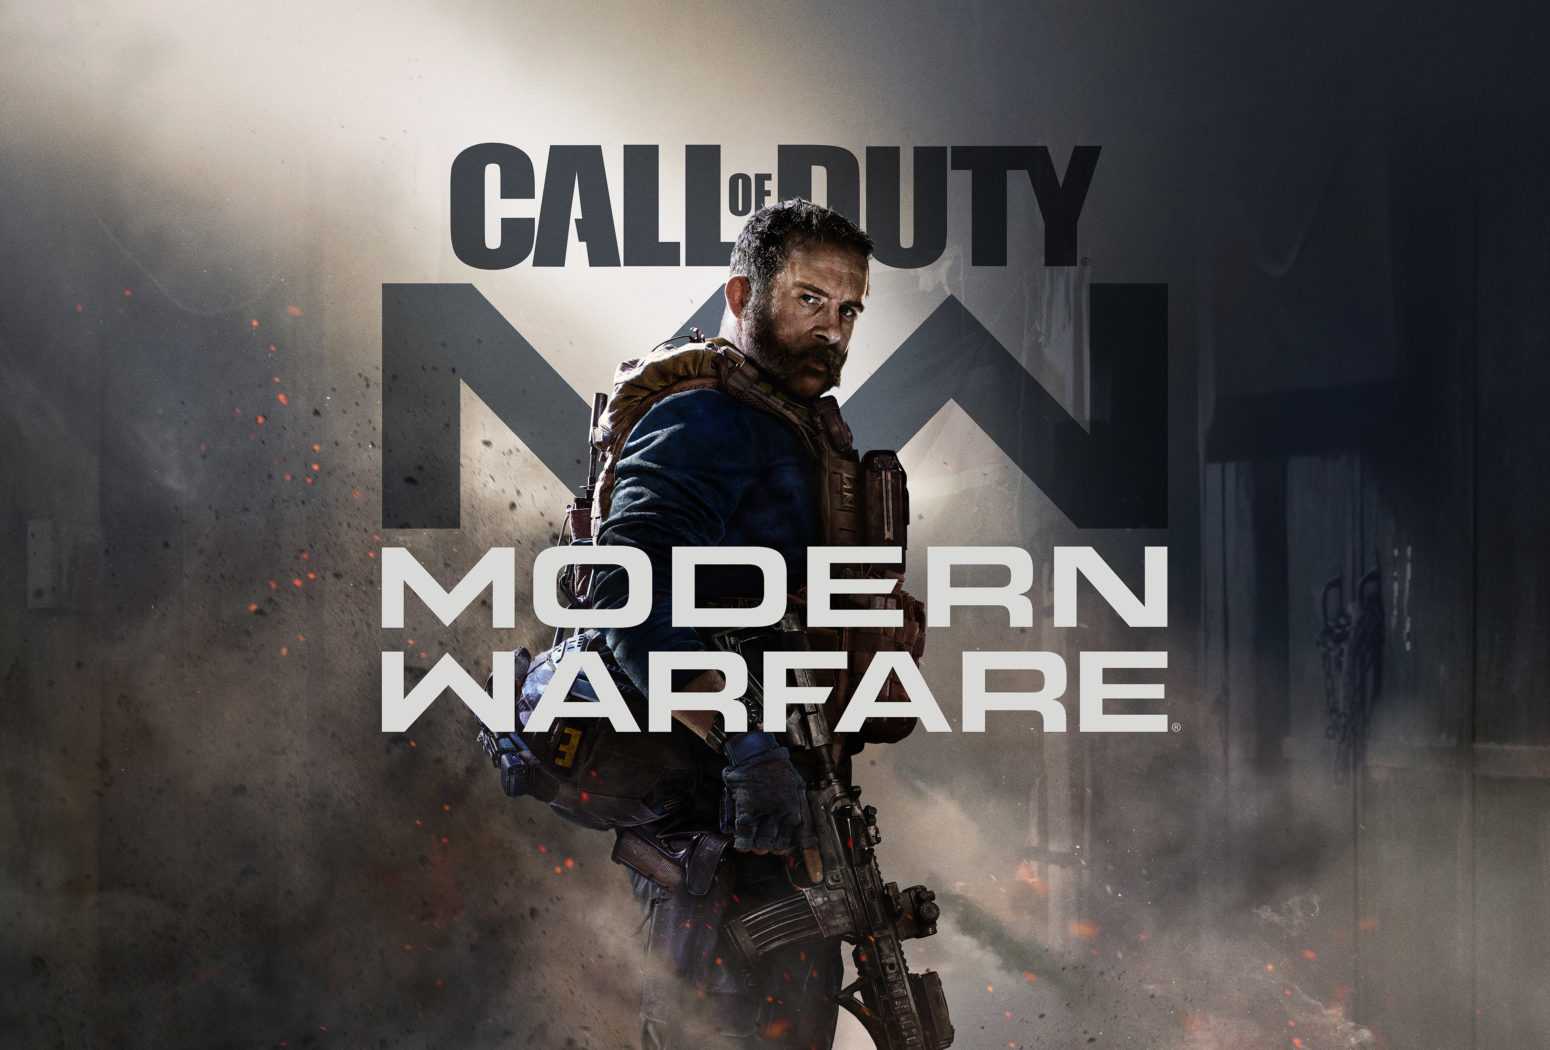 Call of Duty Modern Warfare Artwork